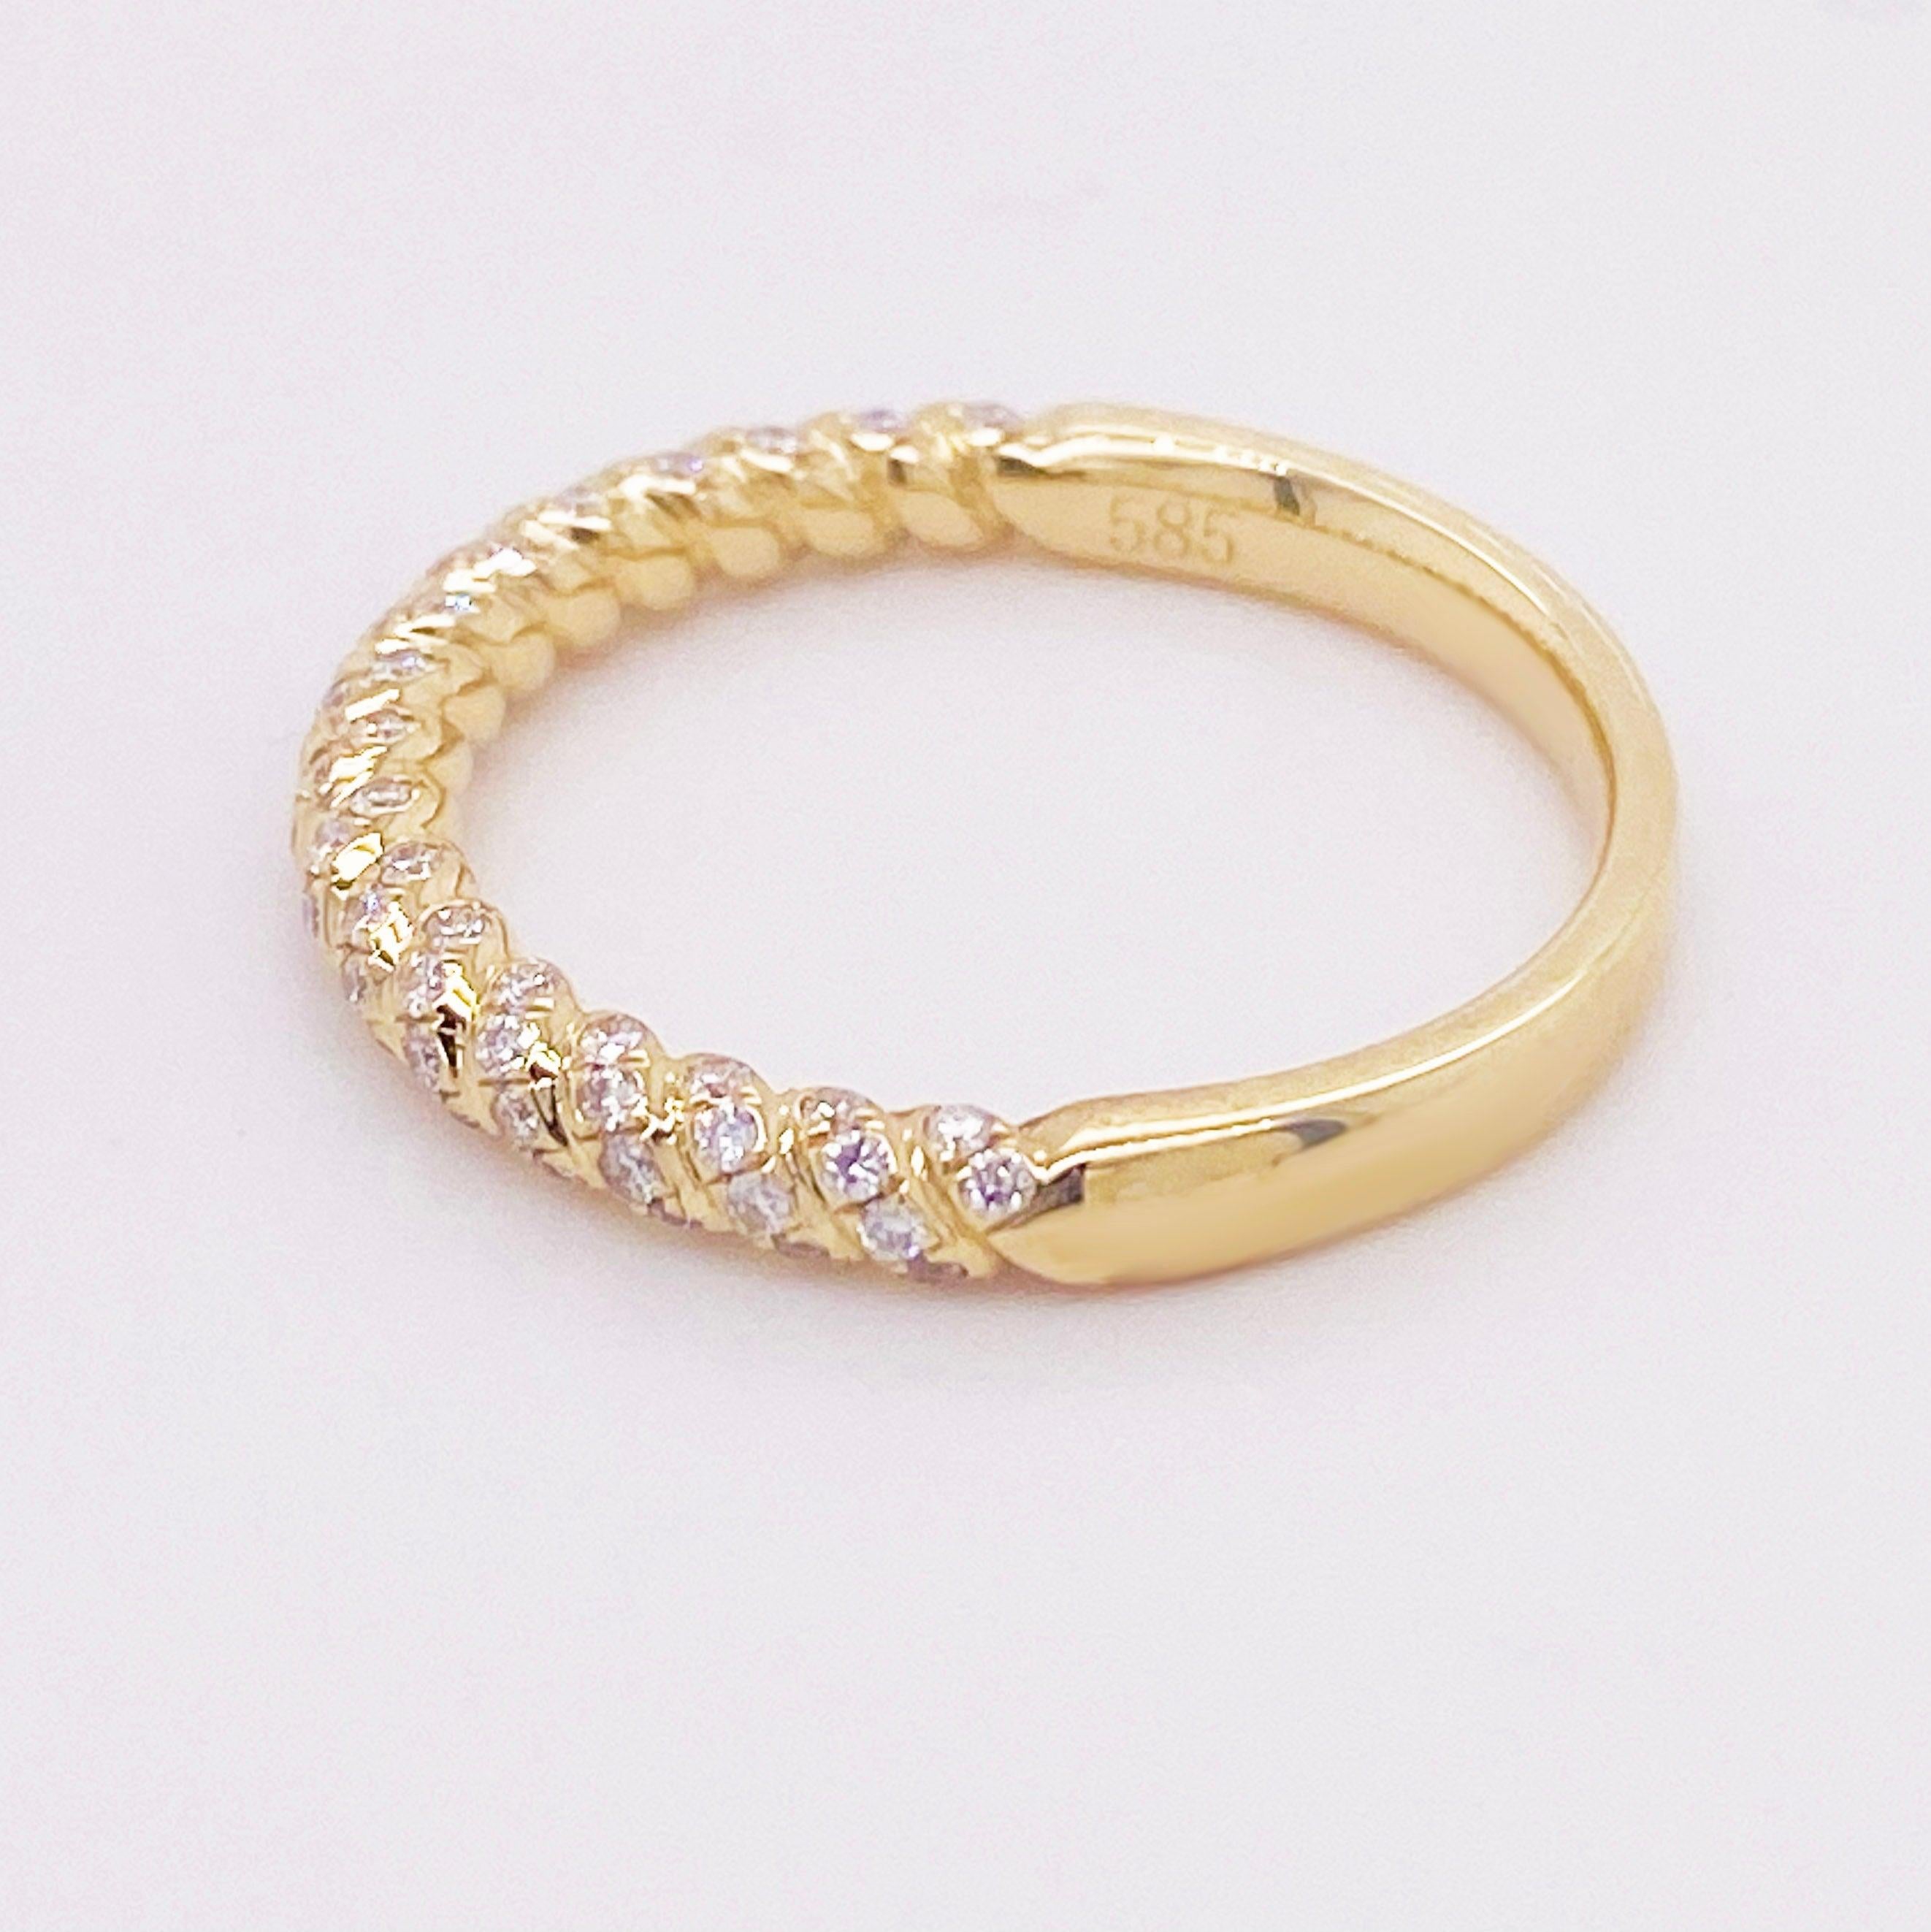 Im Angebot: Verdrehter Diamantring, 14 Karat Gold, Verlobungsring, Verdrehter Ring, stapelbar () 5